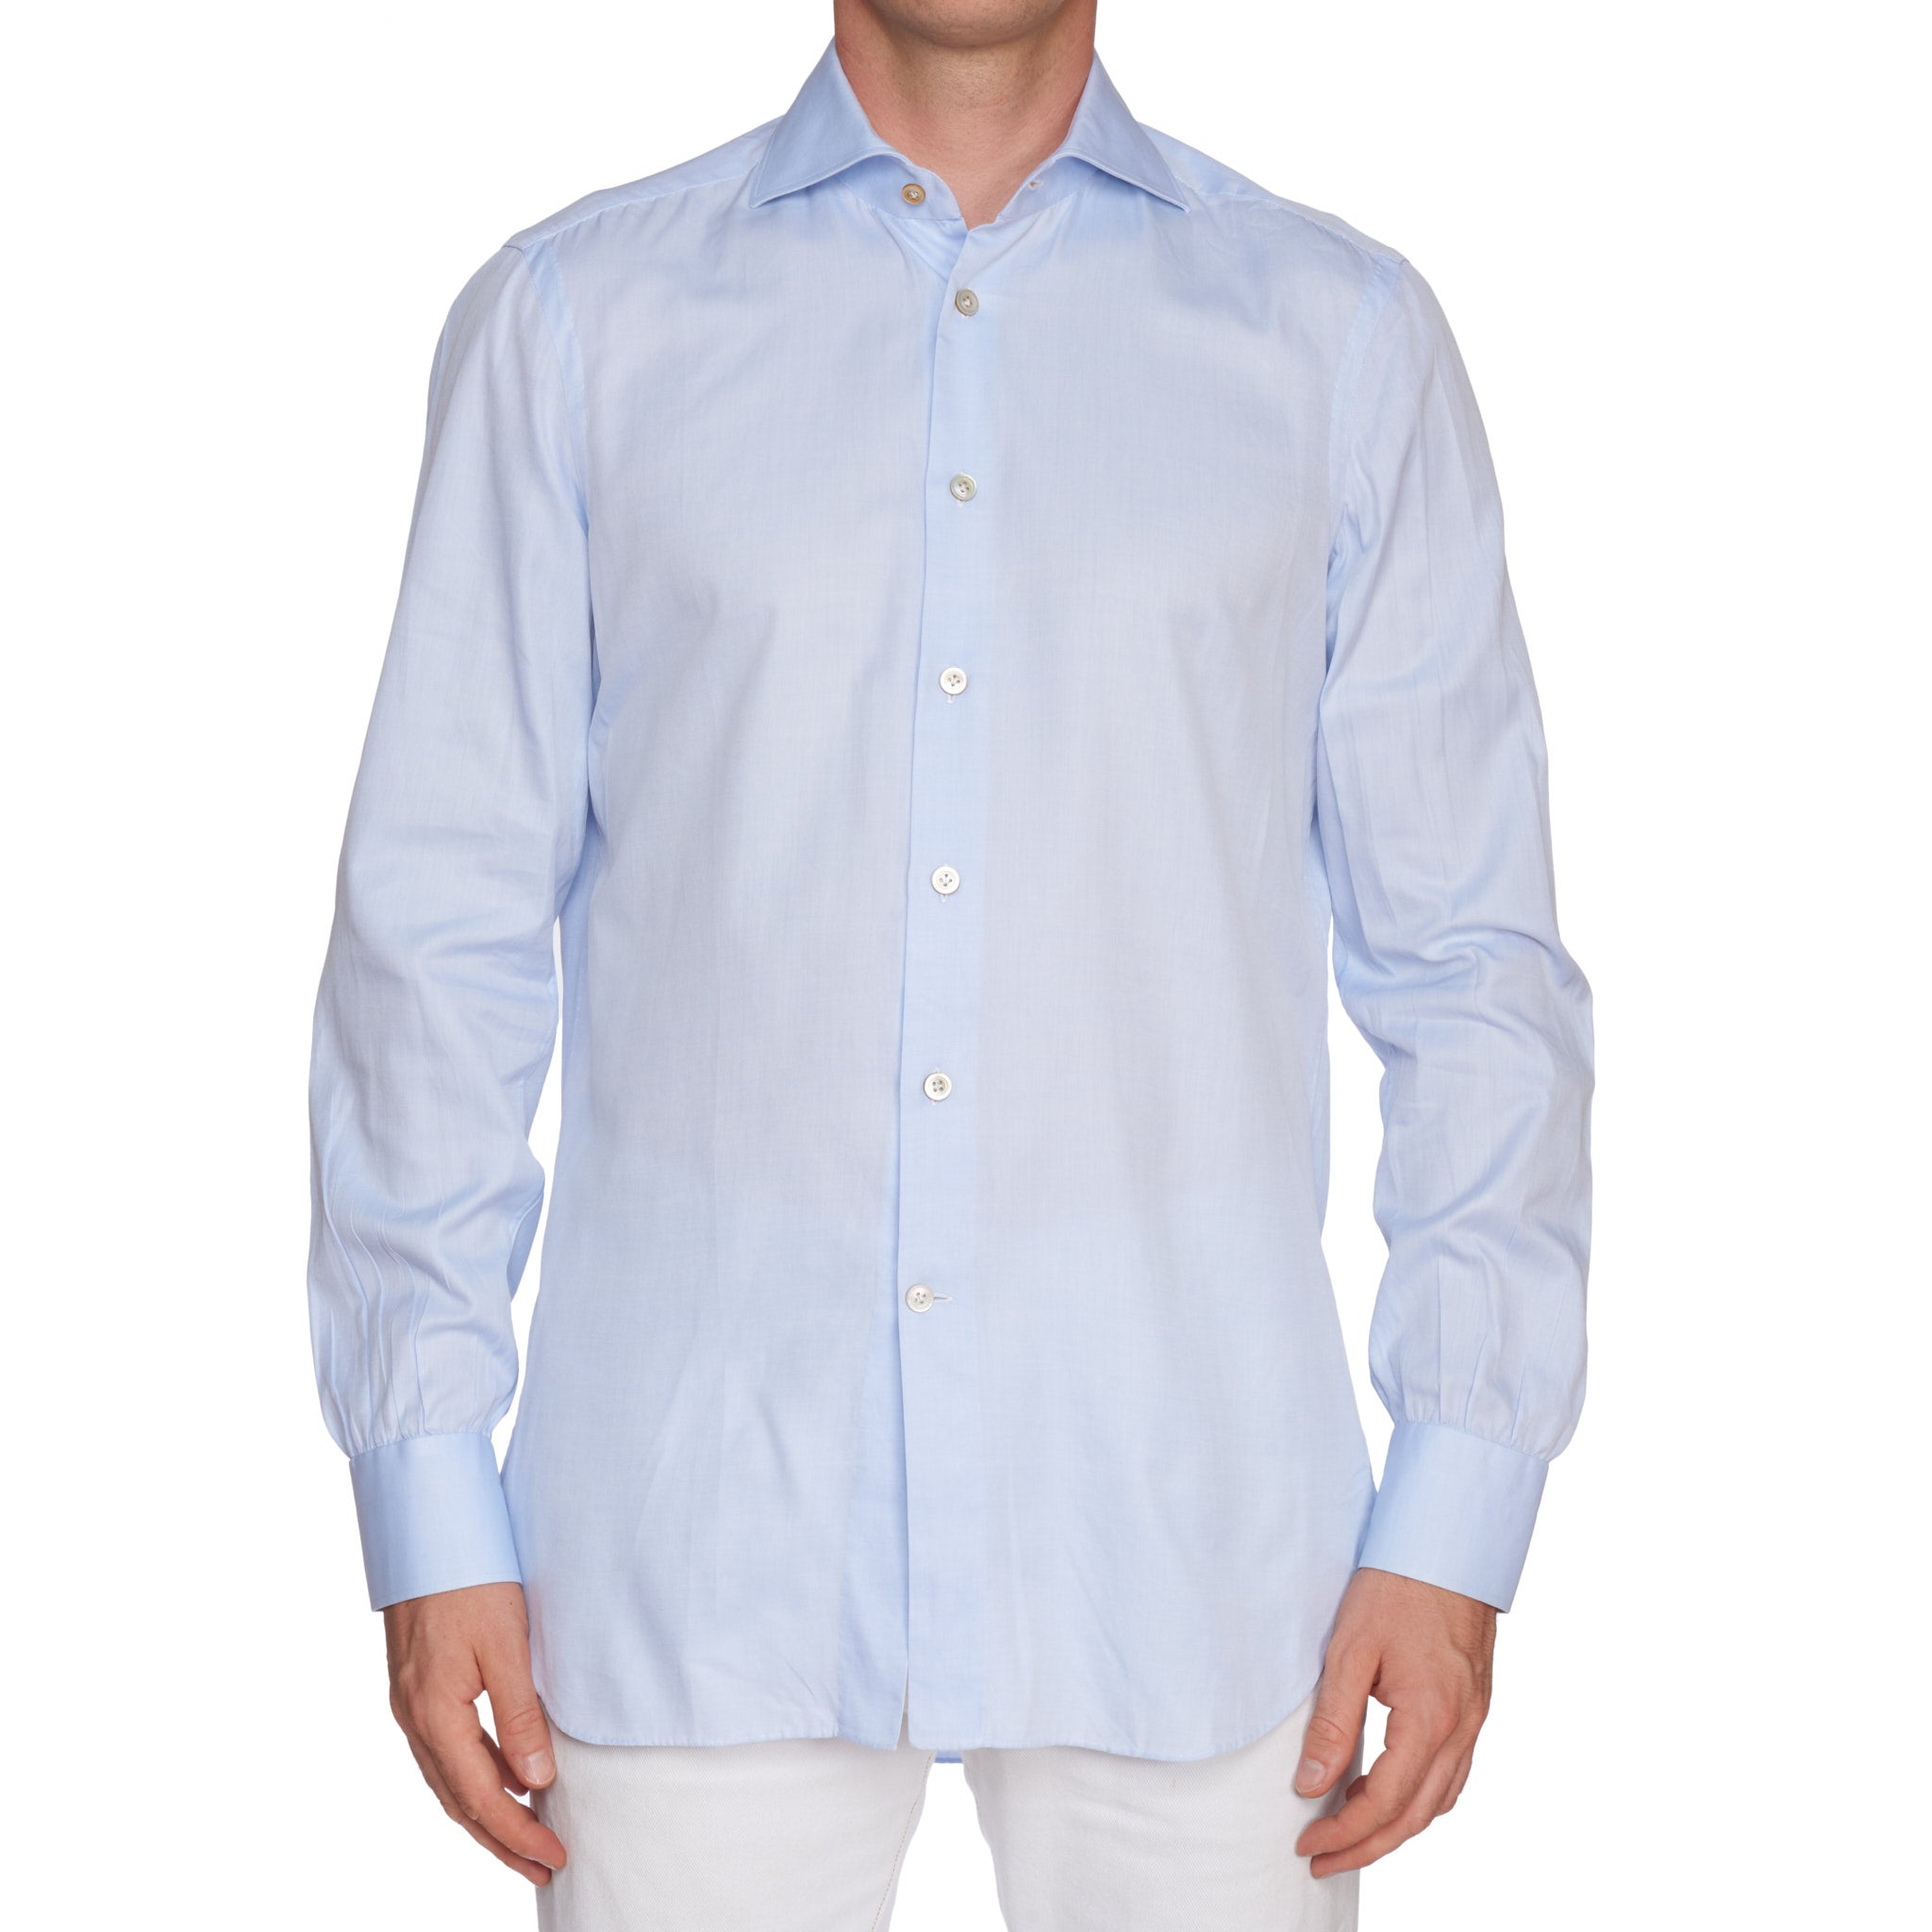 KITON Napoli Handmade Bespoke Solid Blue Twill Cotton Dress Shirt EU 40 US 15.75